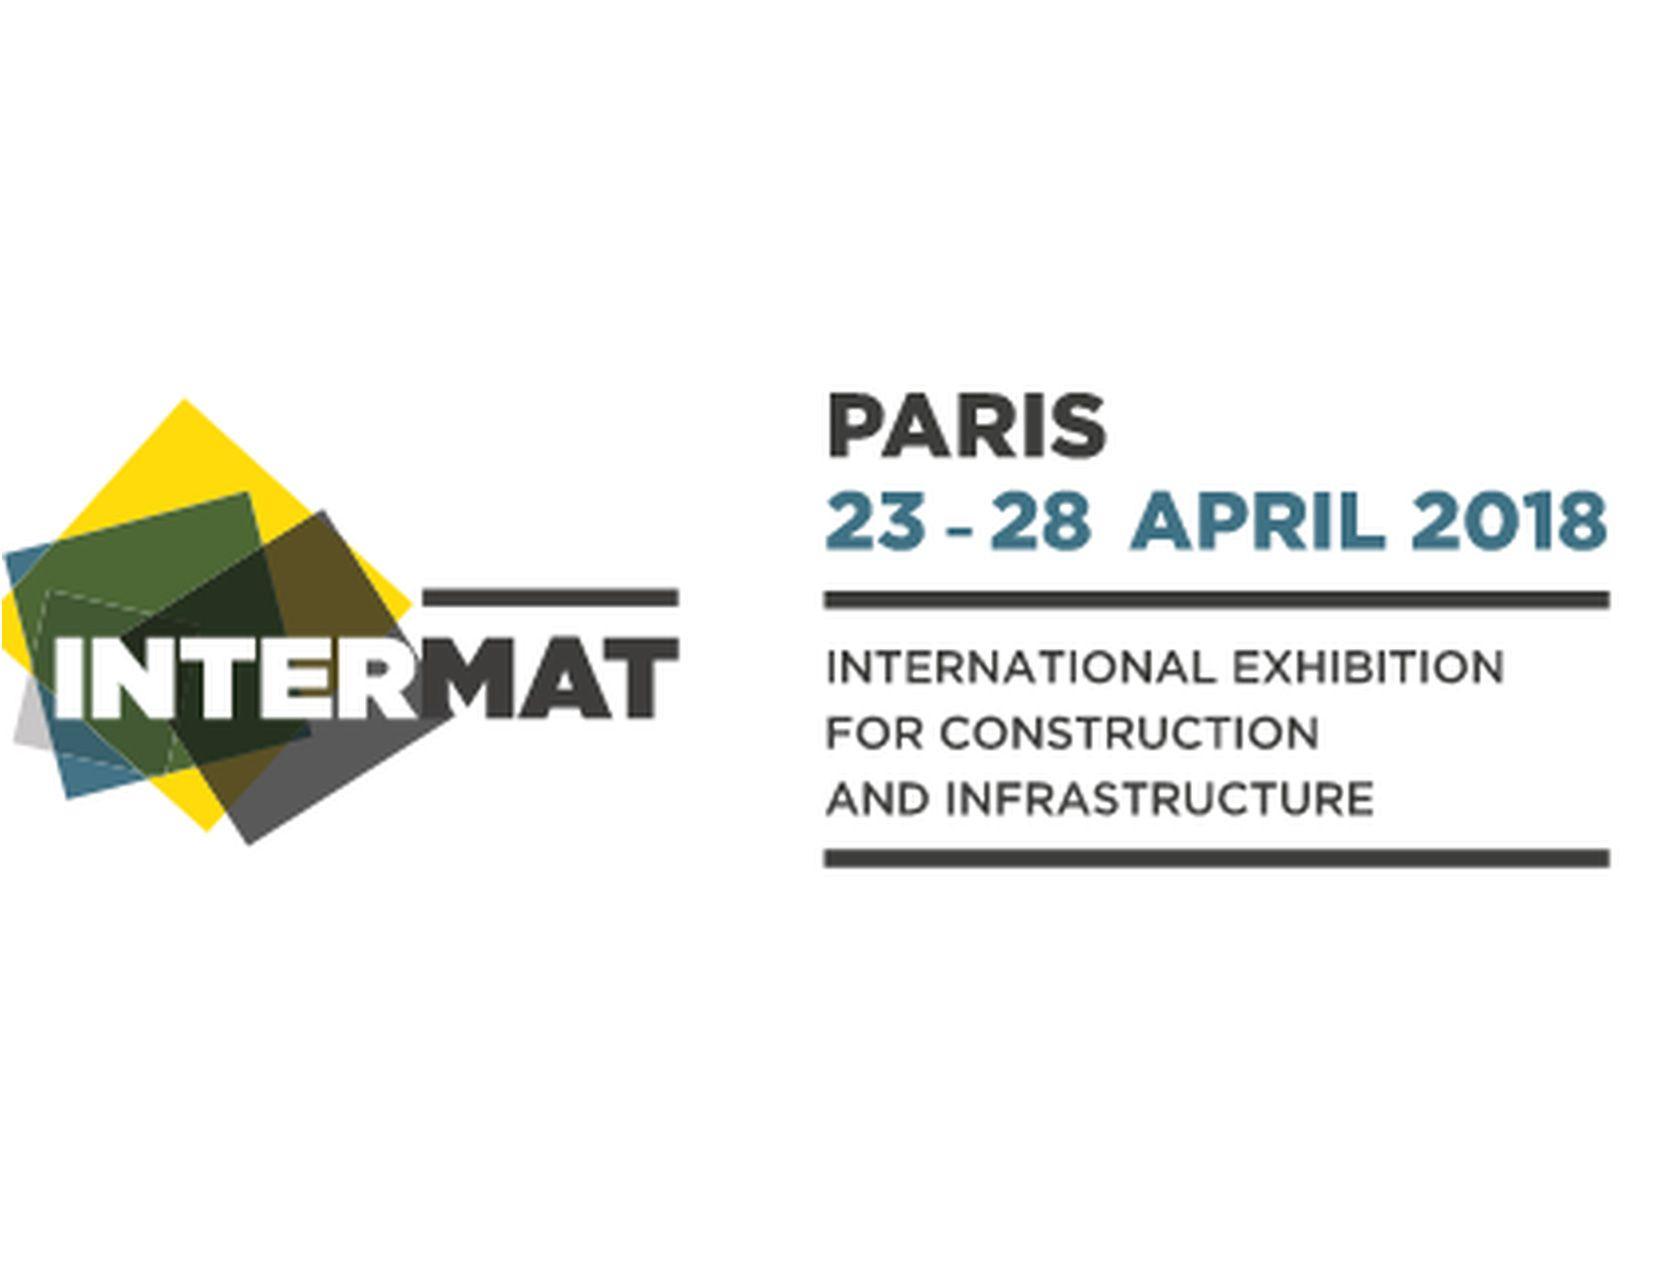 Paris 2018 Logo - INTERMAT 28 April 2018